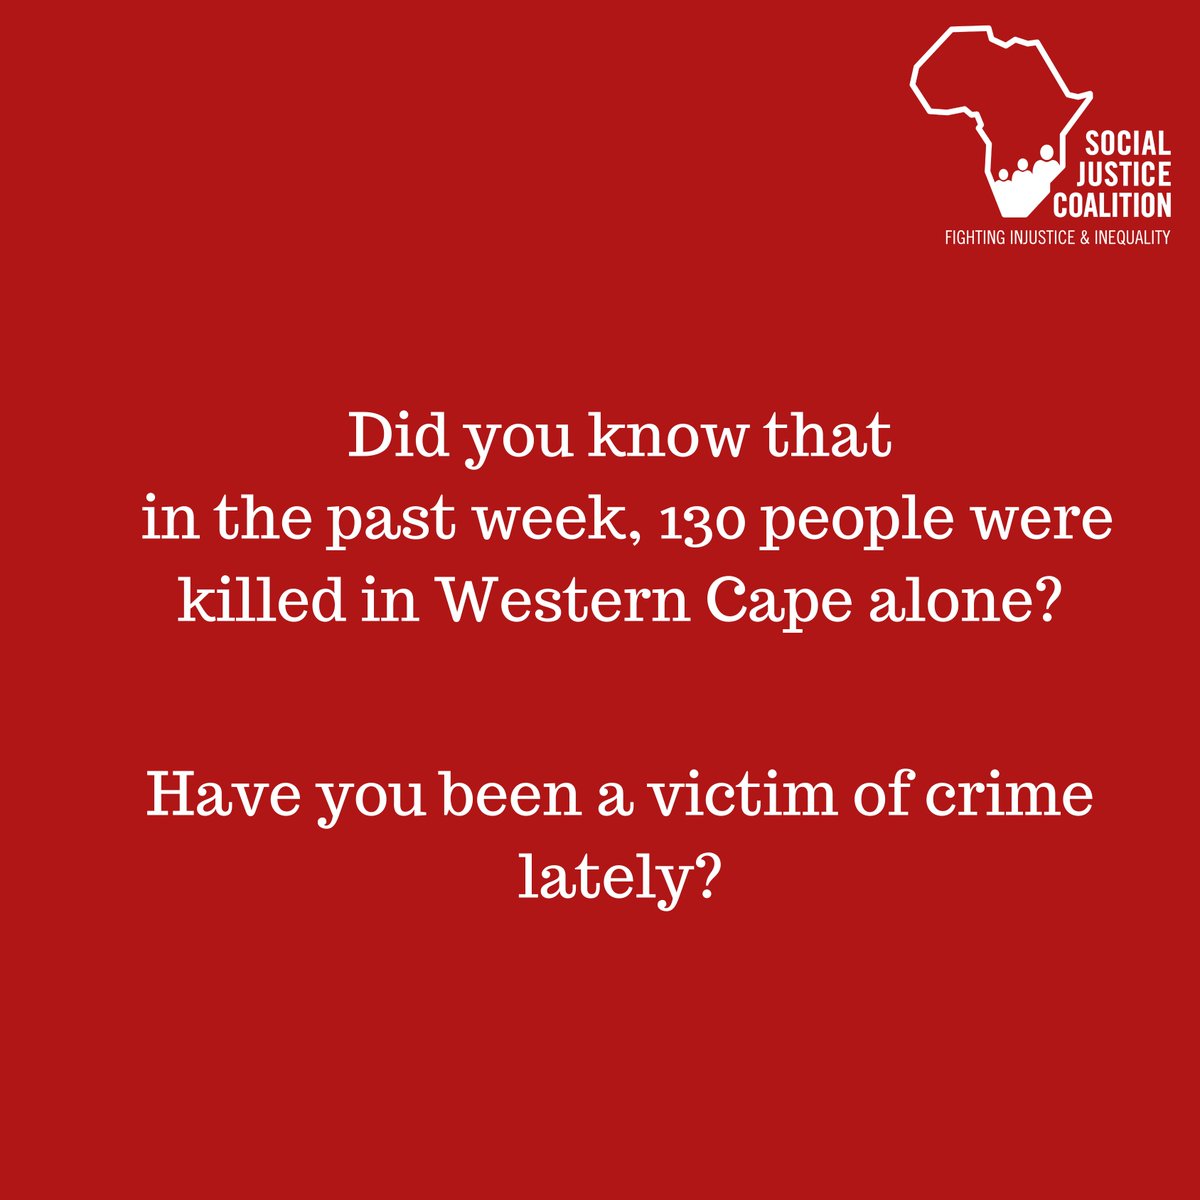 Police Minister Bheki Cele made some shocking revelations about the Western Cape. #safercommunities #westerncape #bhekicele youtube.com/watch?v=Kp9G6F…